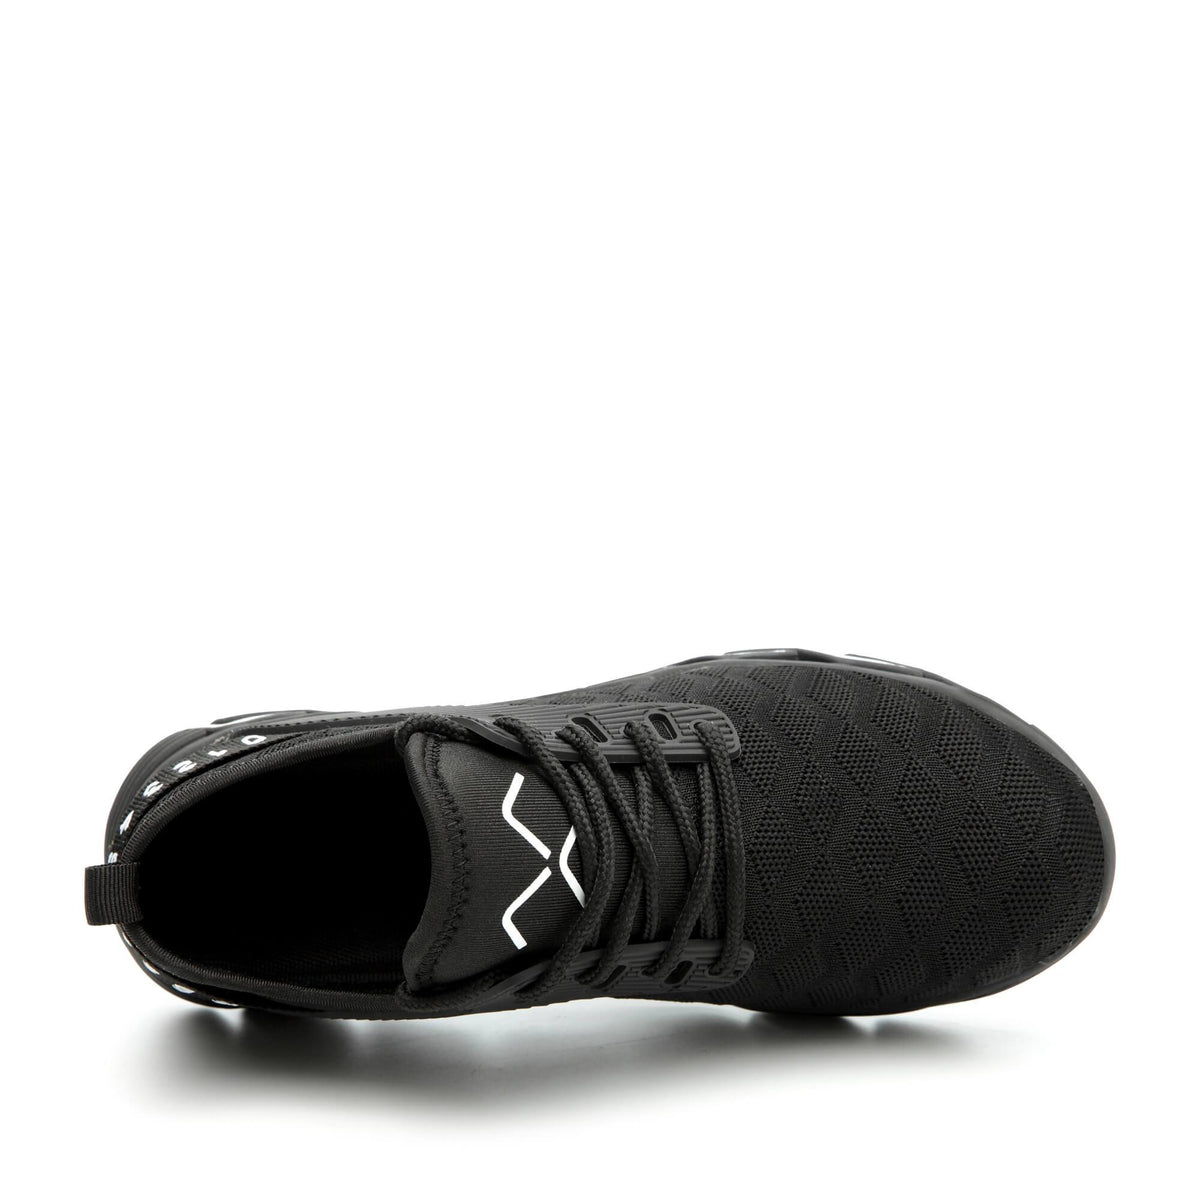 Ziczac Black White - Indestructible Shoes